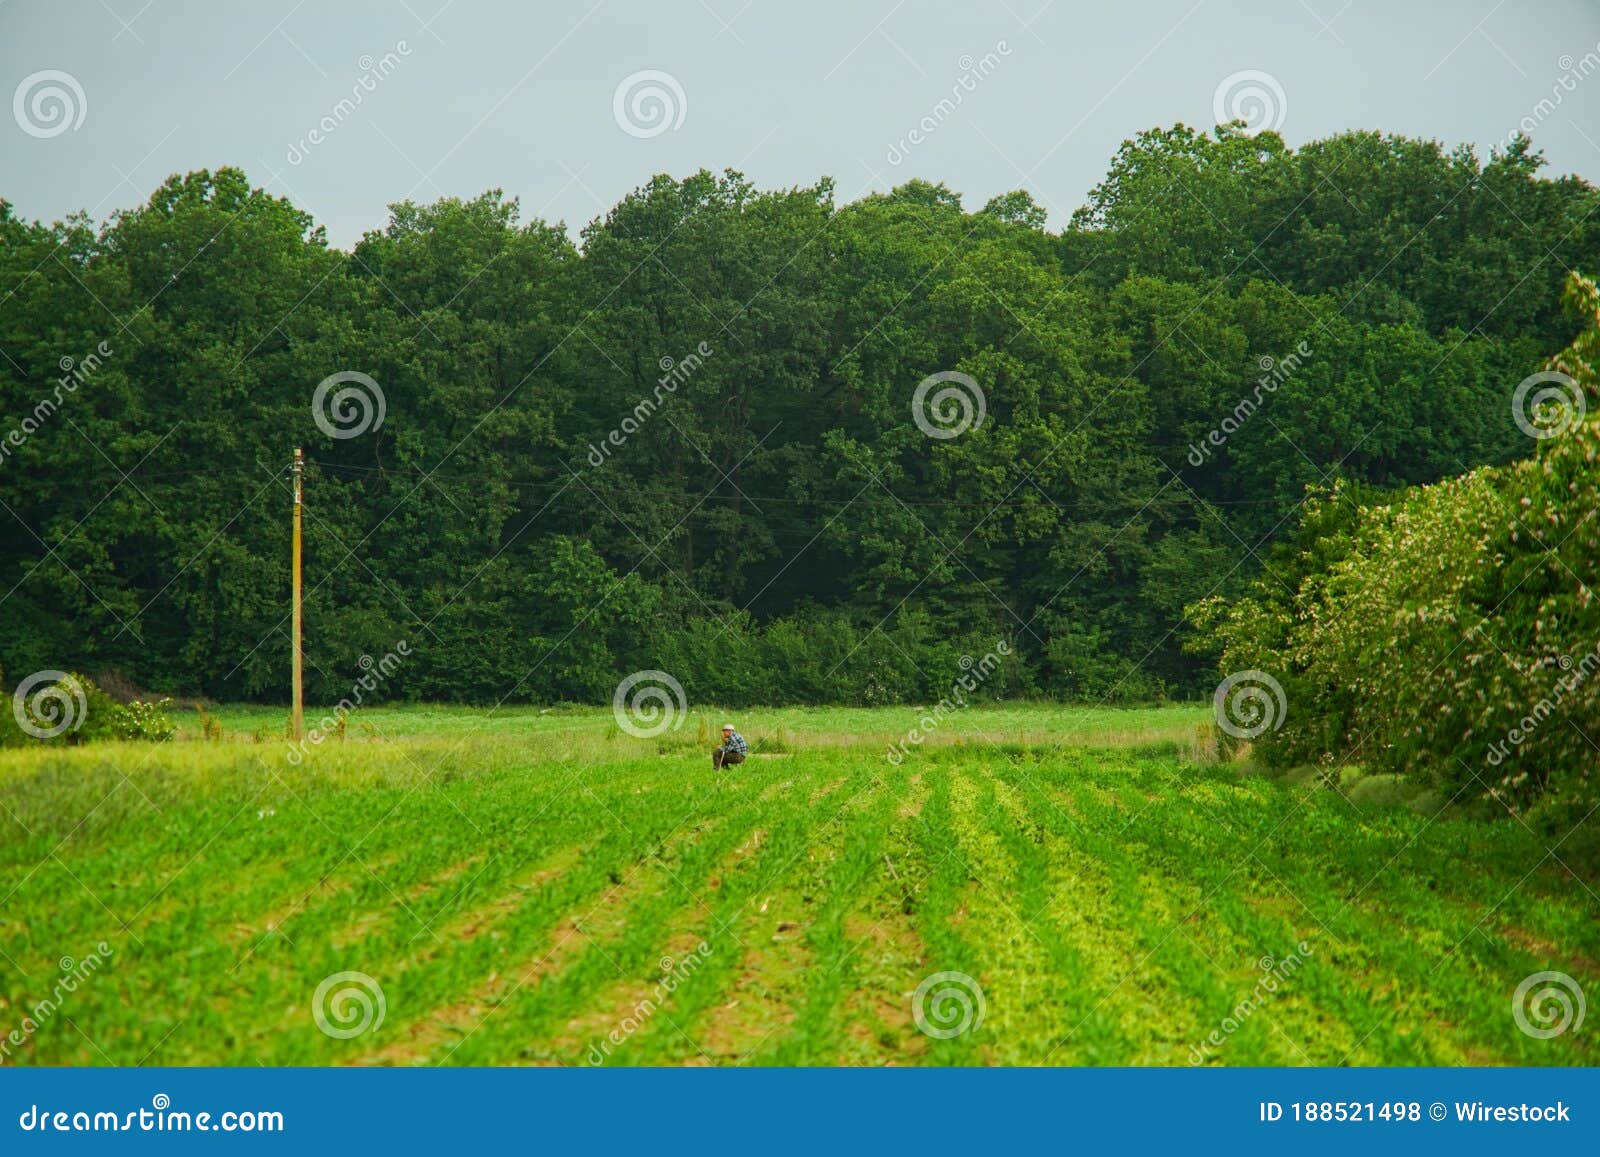 old man peasant, working cornfield near green forest,  rural village